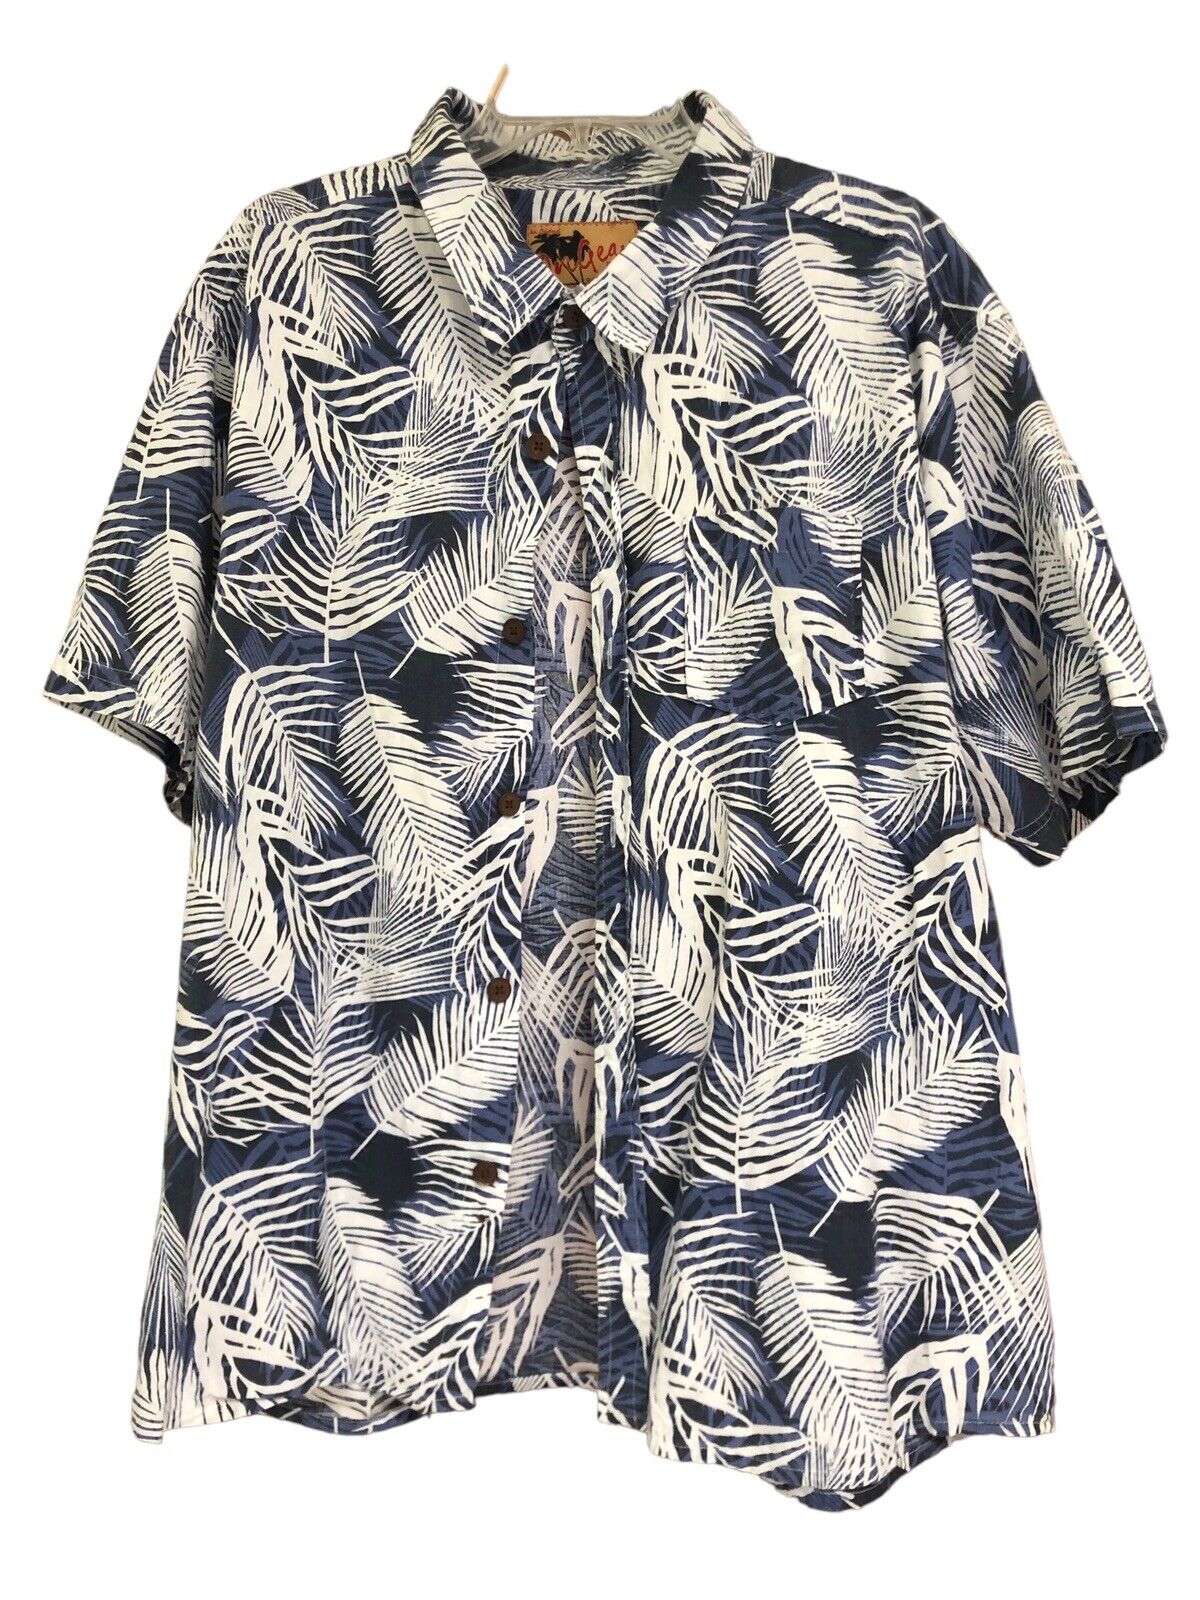 INGEAR Hawaiian Shirt Men’s Size Large Blue and White